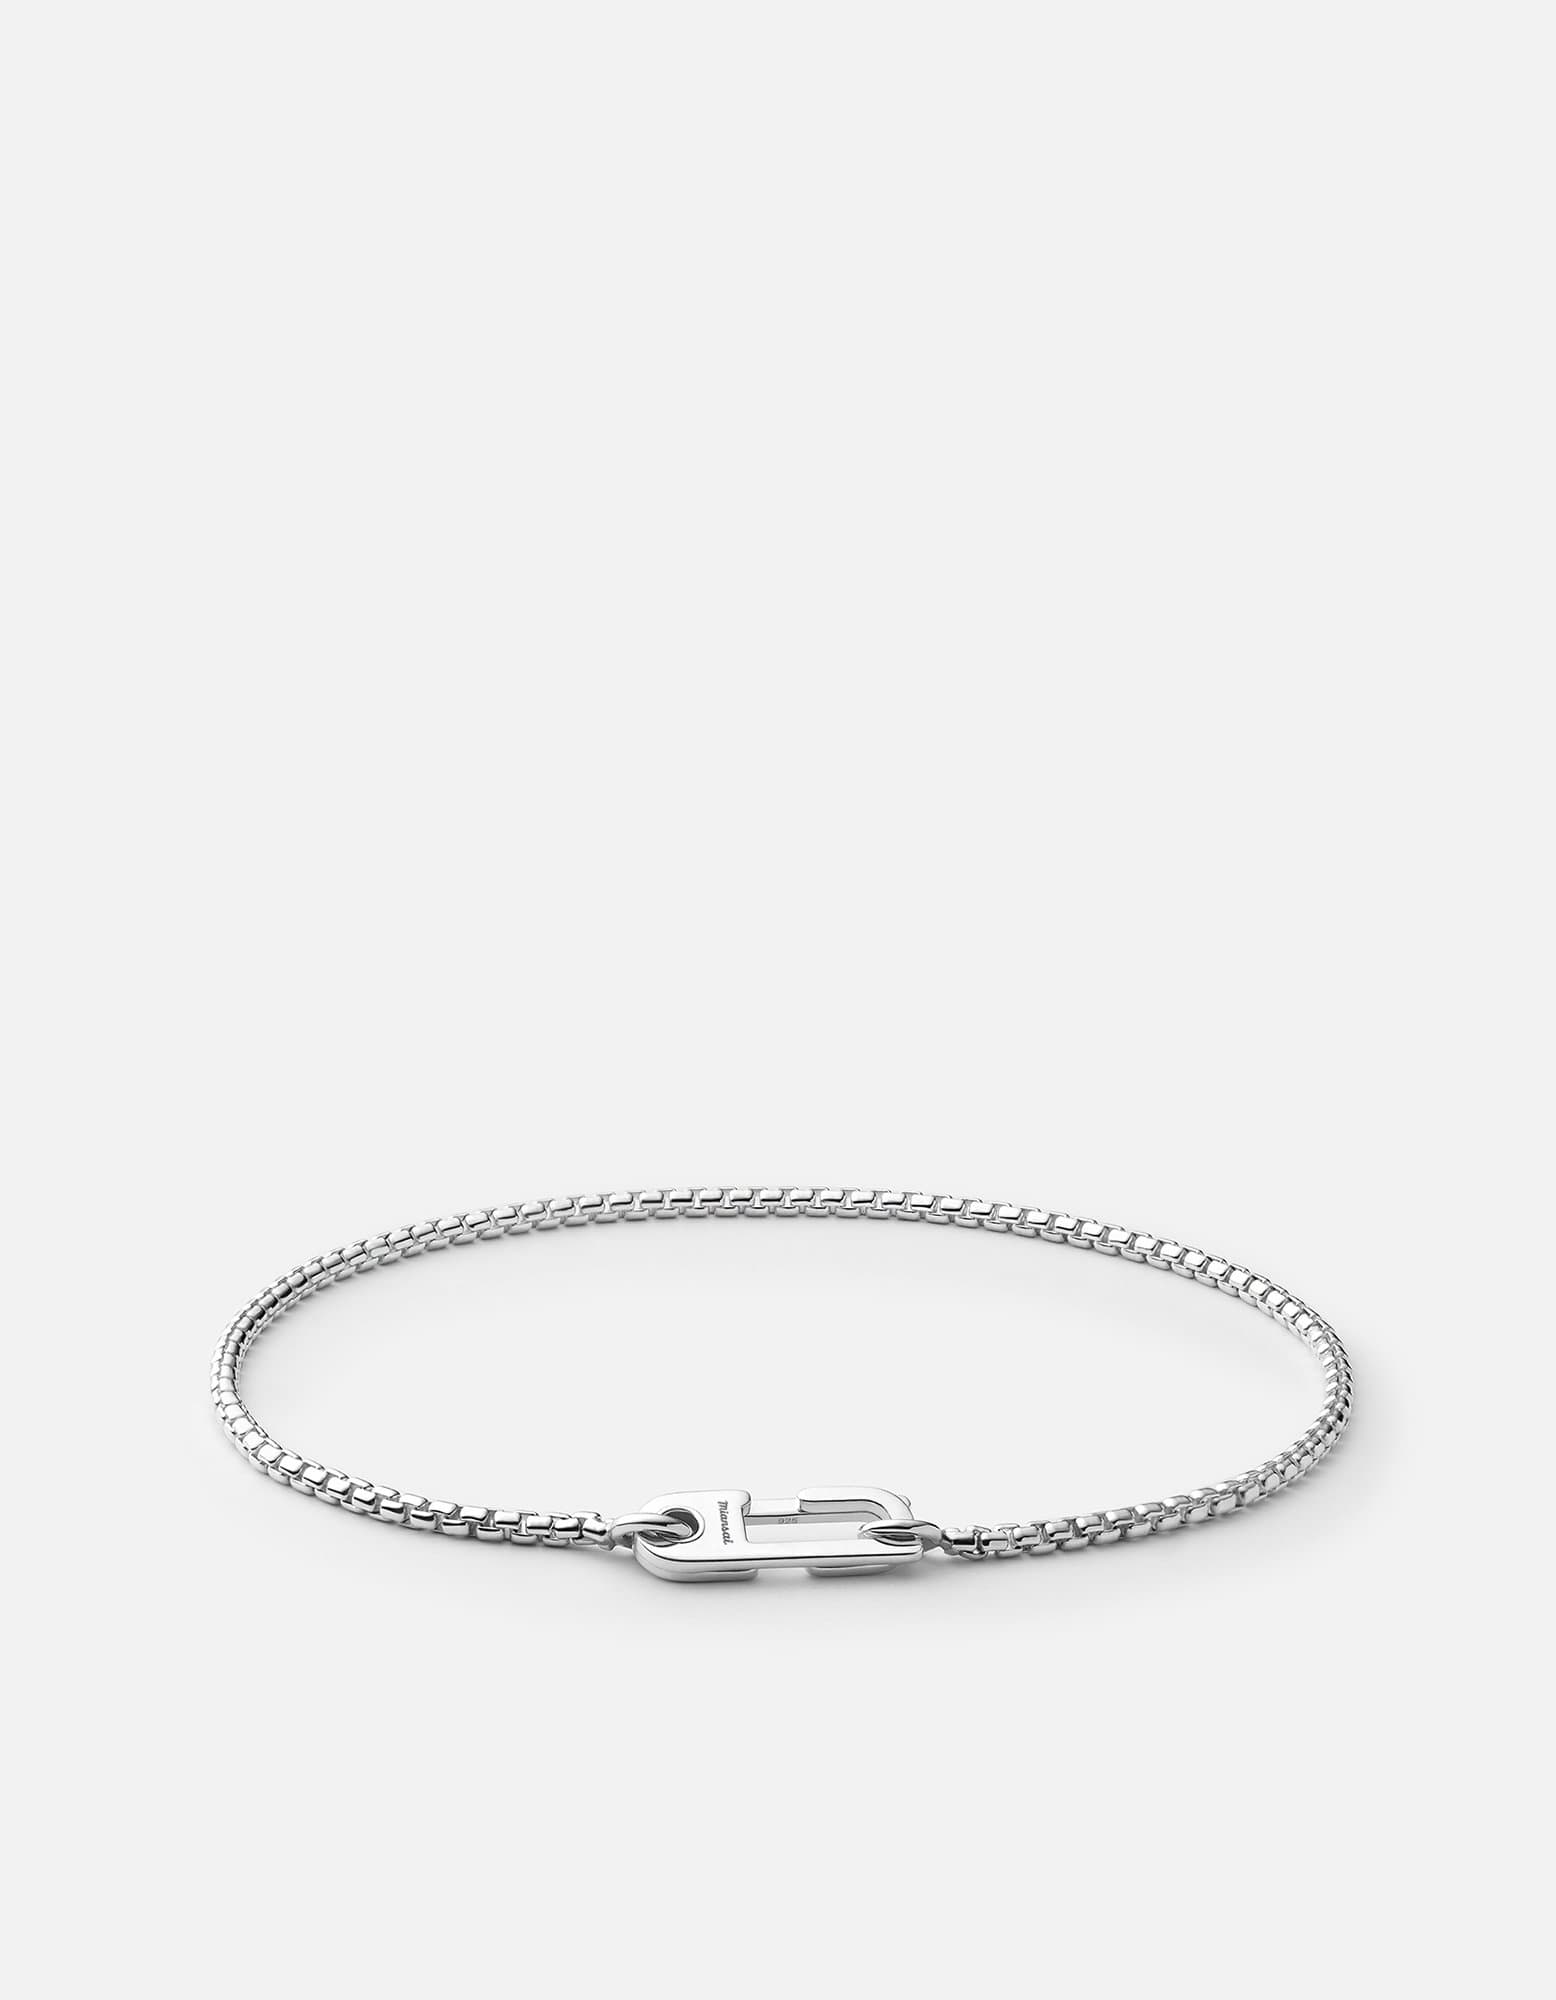 Image of Annex Venetian Chain Bracelet, Sterling Silver